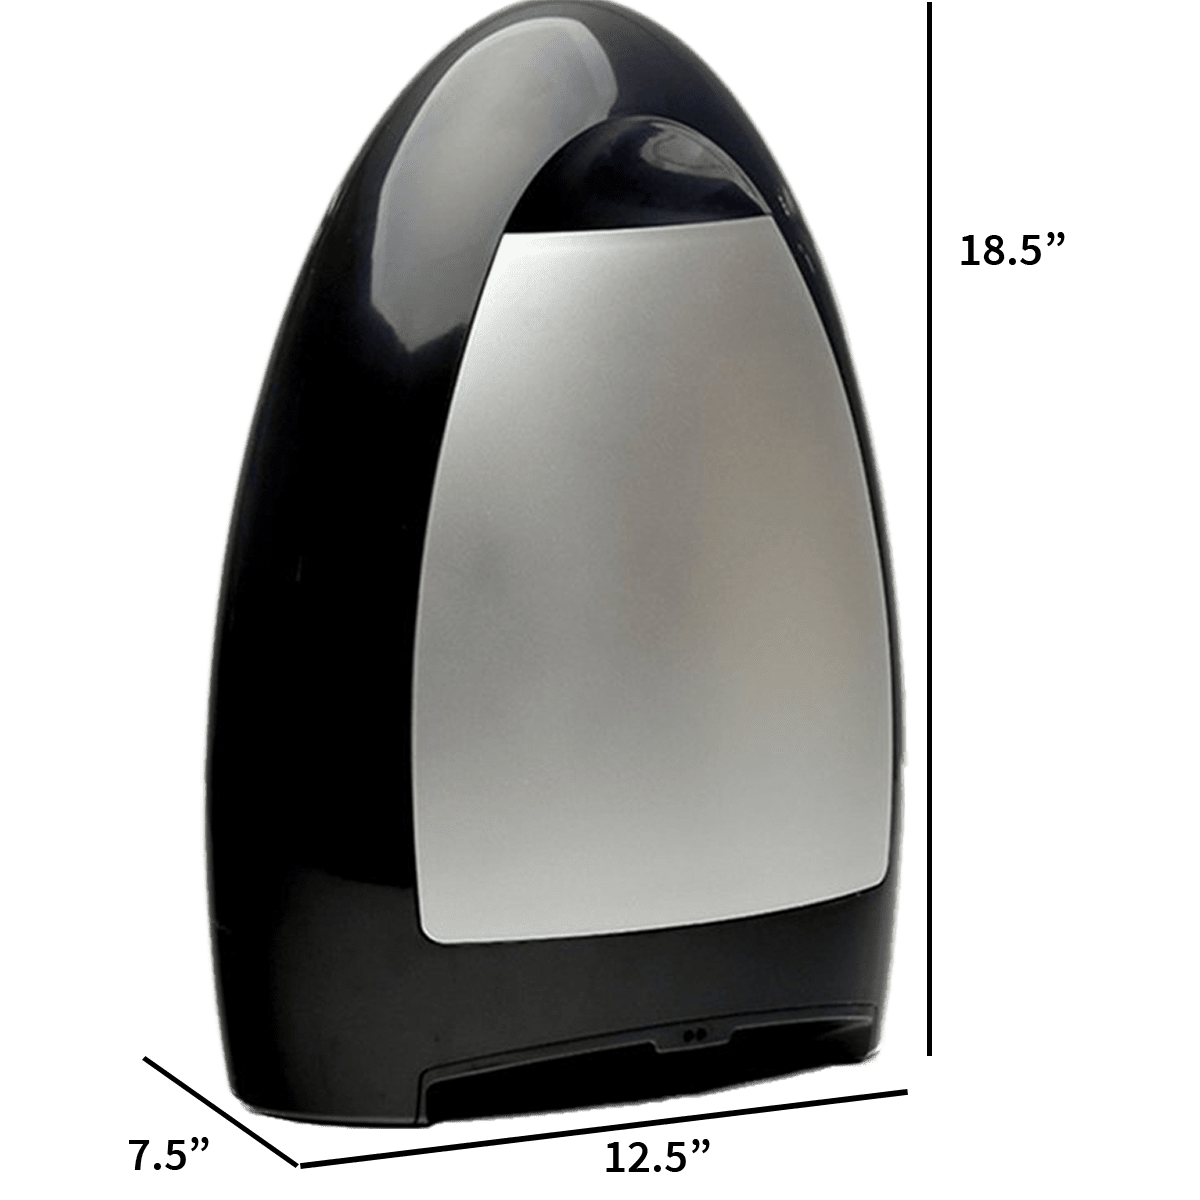 EyeVac Home Touchless Cordless Stick Vacuum Cleaner - Designer White (EVH-W)